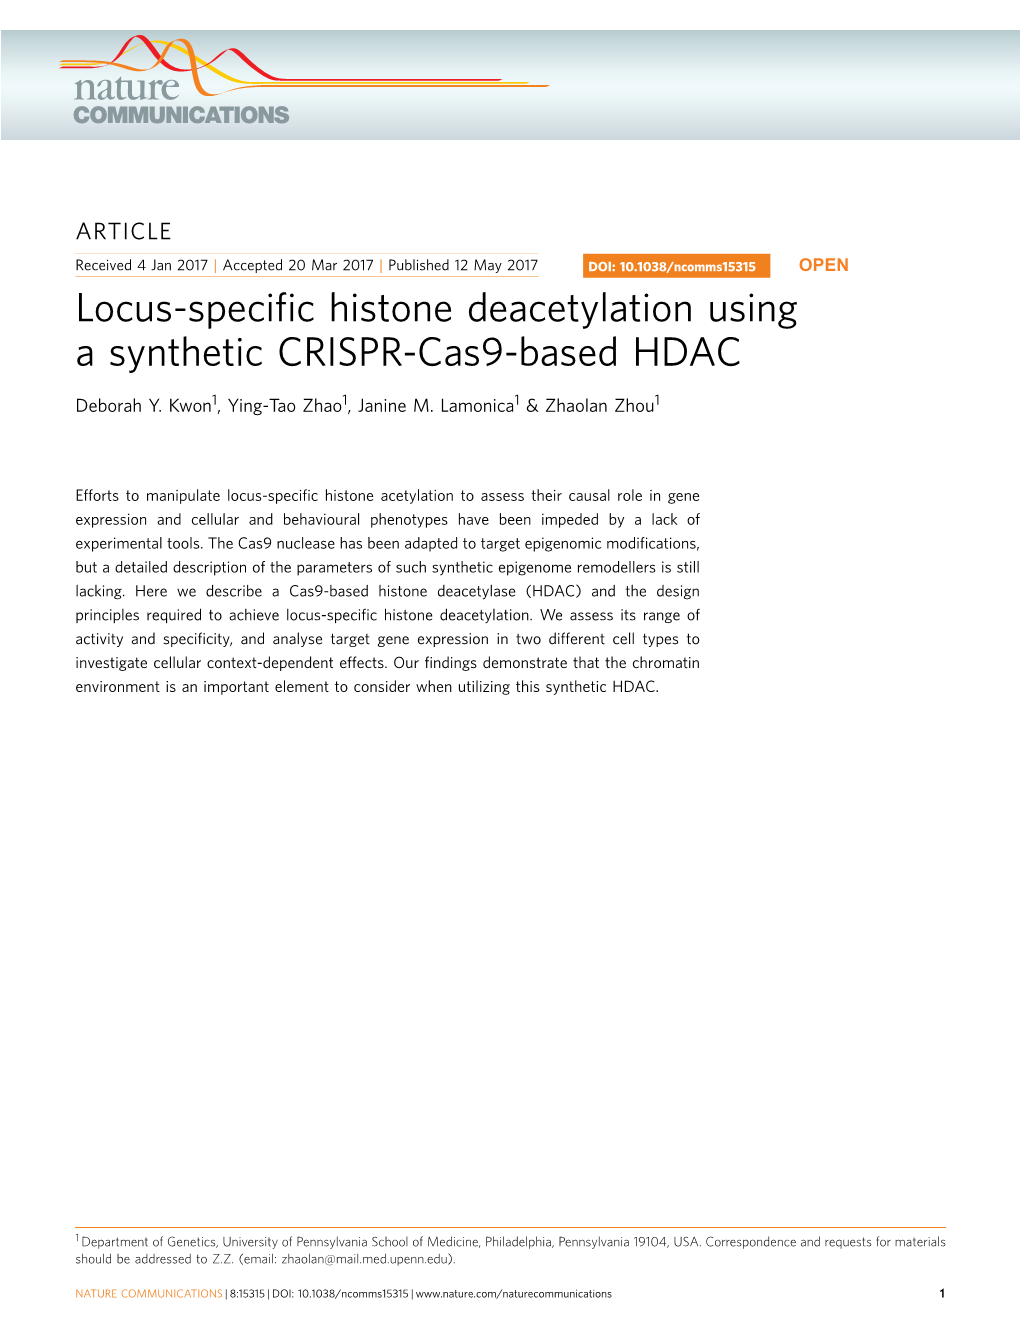 Locus-Specific Histone Deacetylation Using a Synthetic CRISPR-Cas9